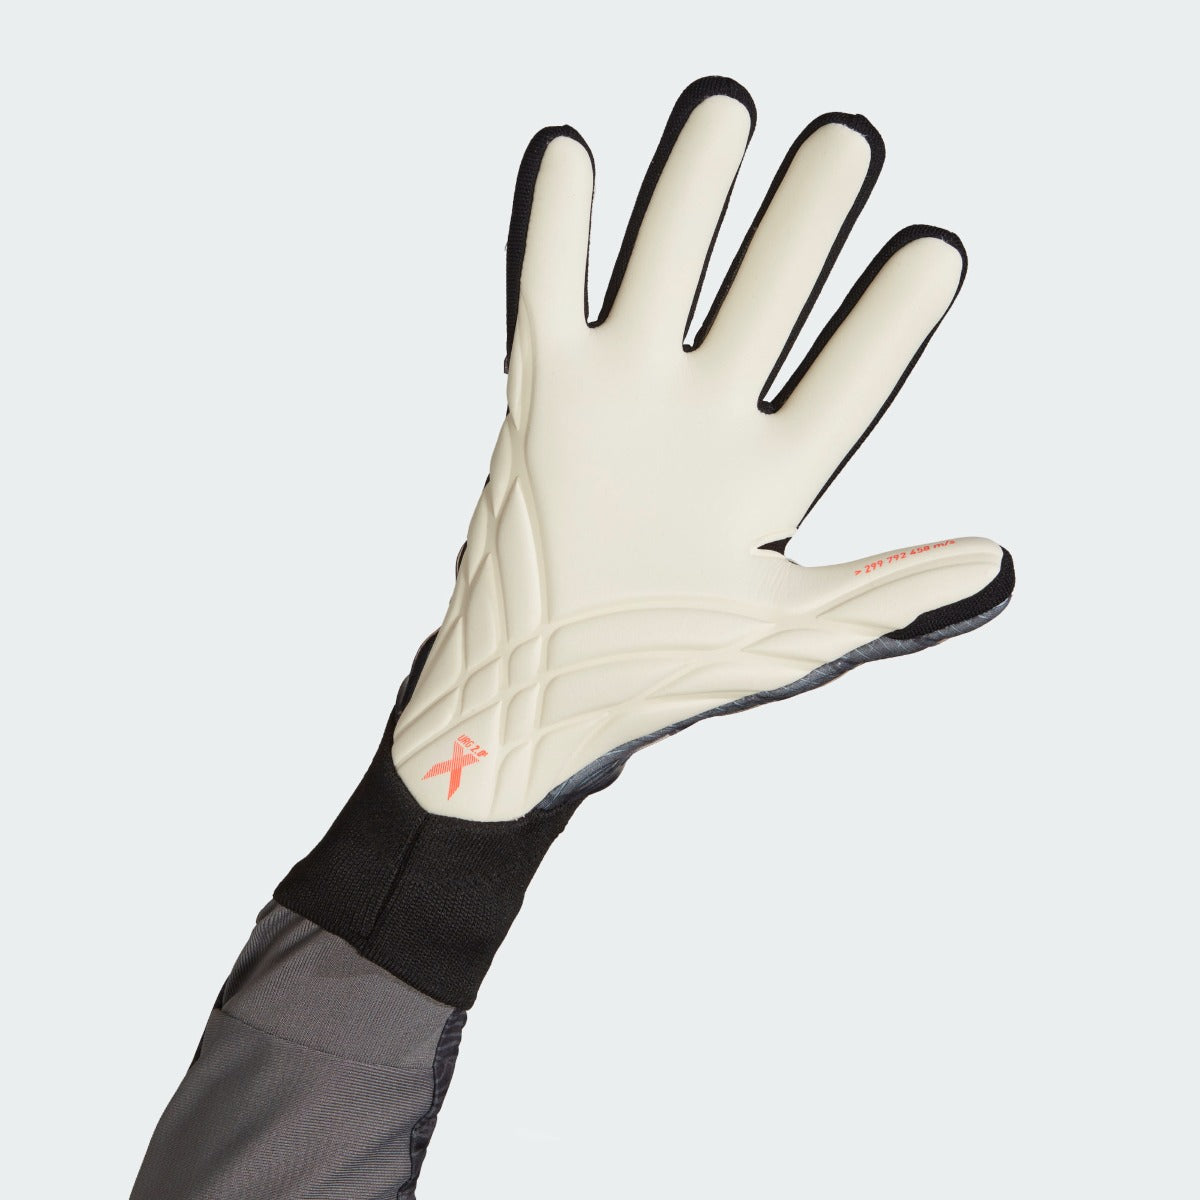 Adidas X Pro Goalkeeper Gloves - Black-Grey-Blue (Single - Inner)